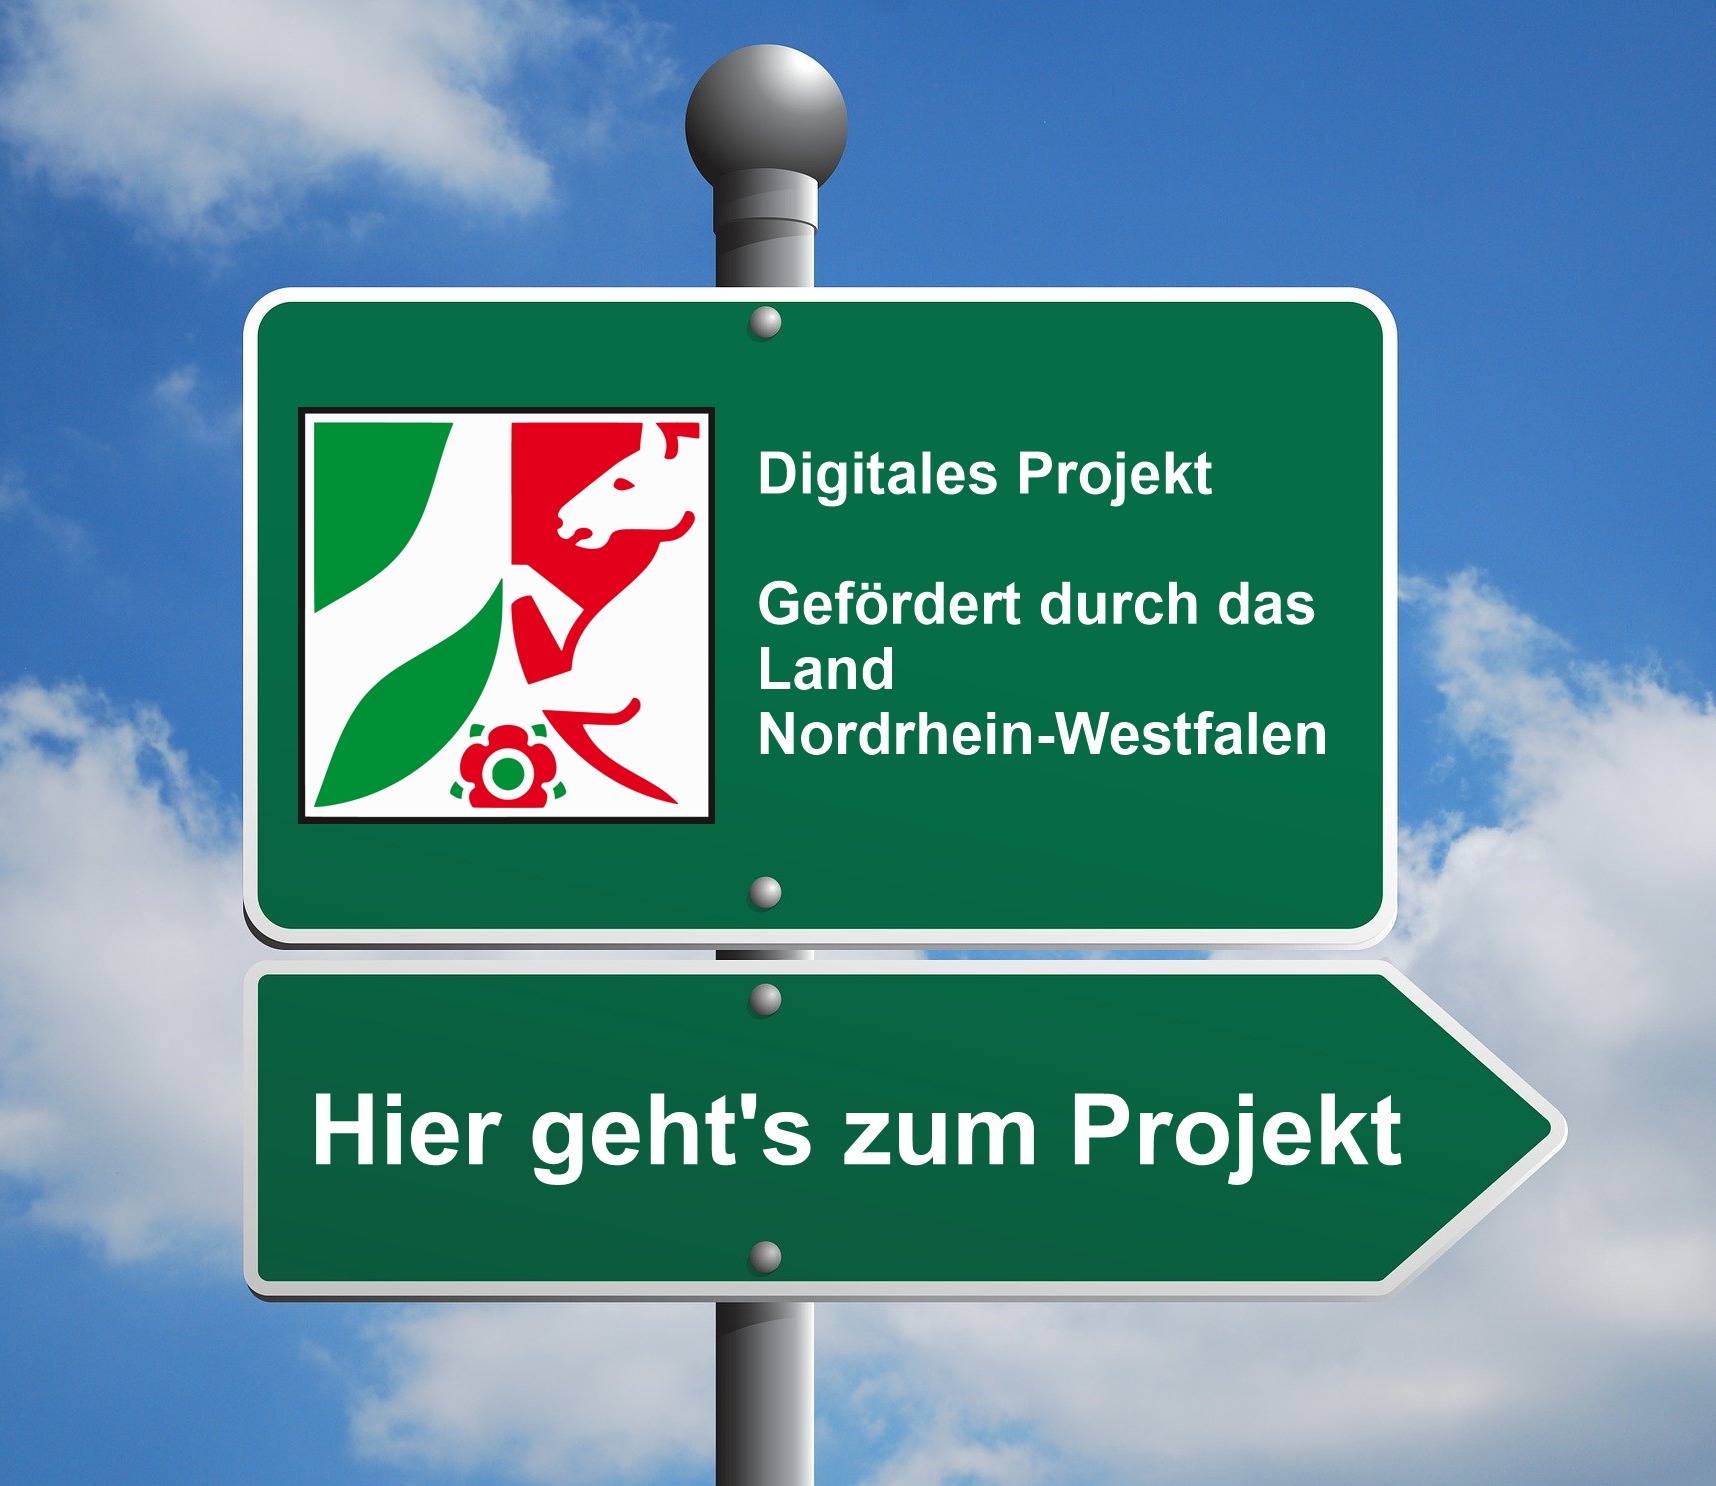 Digitalprojekt des Landes NRW